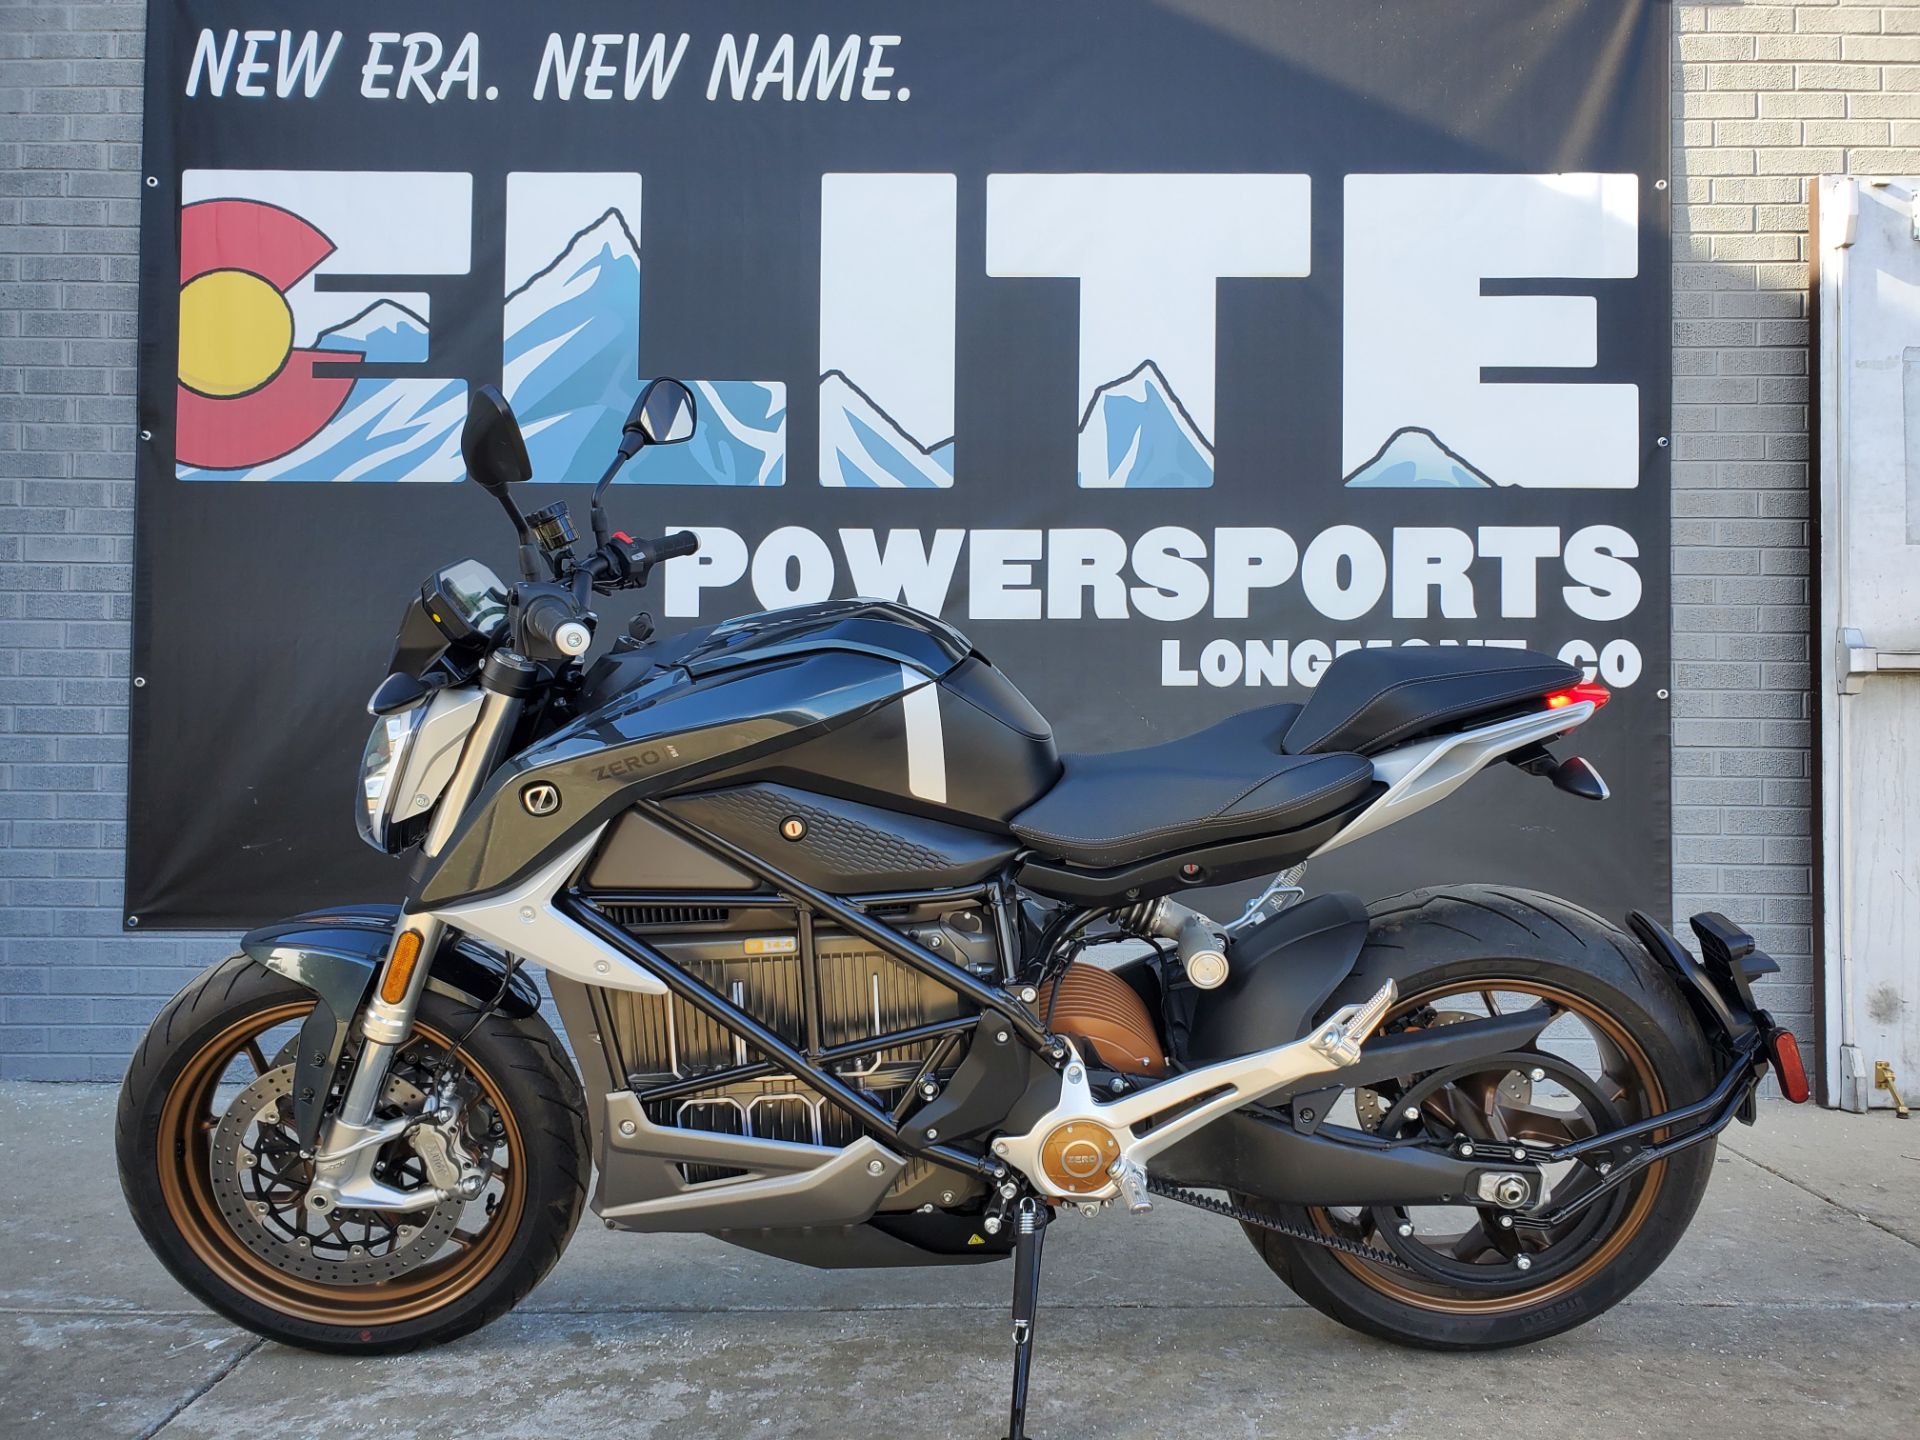 2021 Zero Motorcycles SR/F NA ZF14.4 Premium in Longmont, Colorado - Photo 2